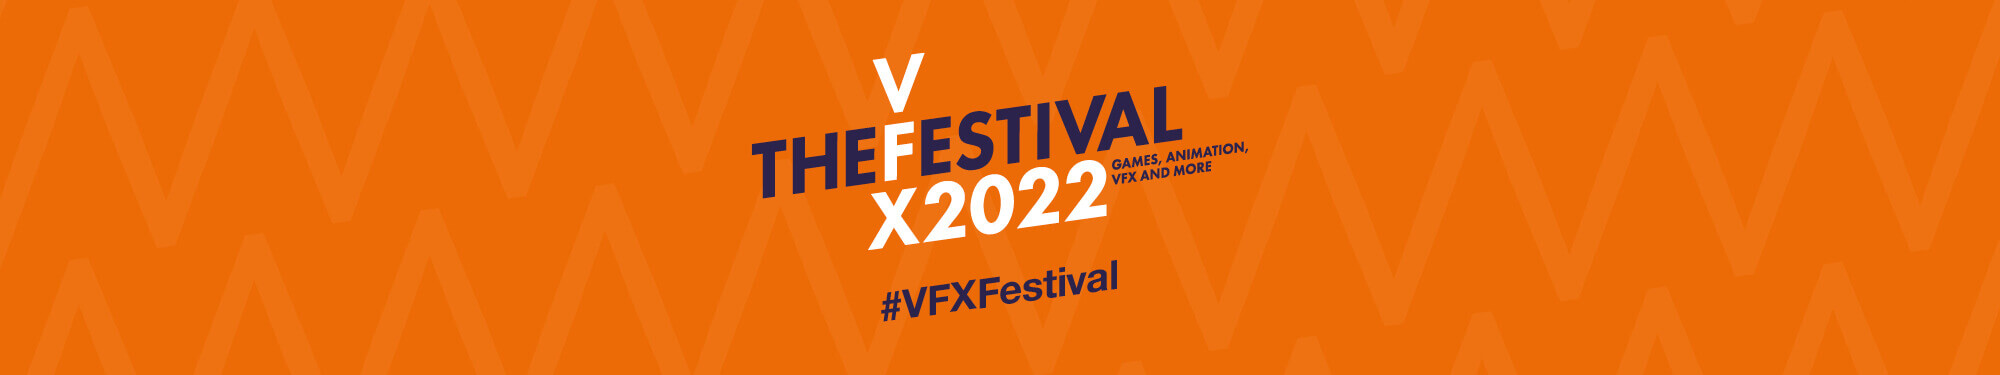 VFX Festival banner with orange background